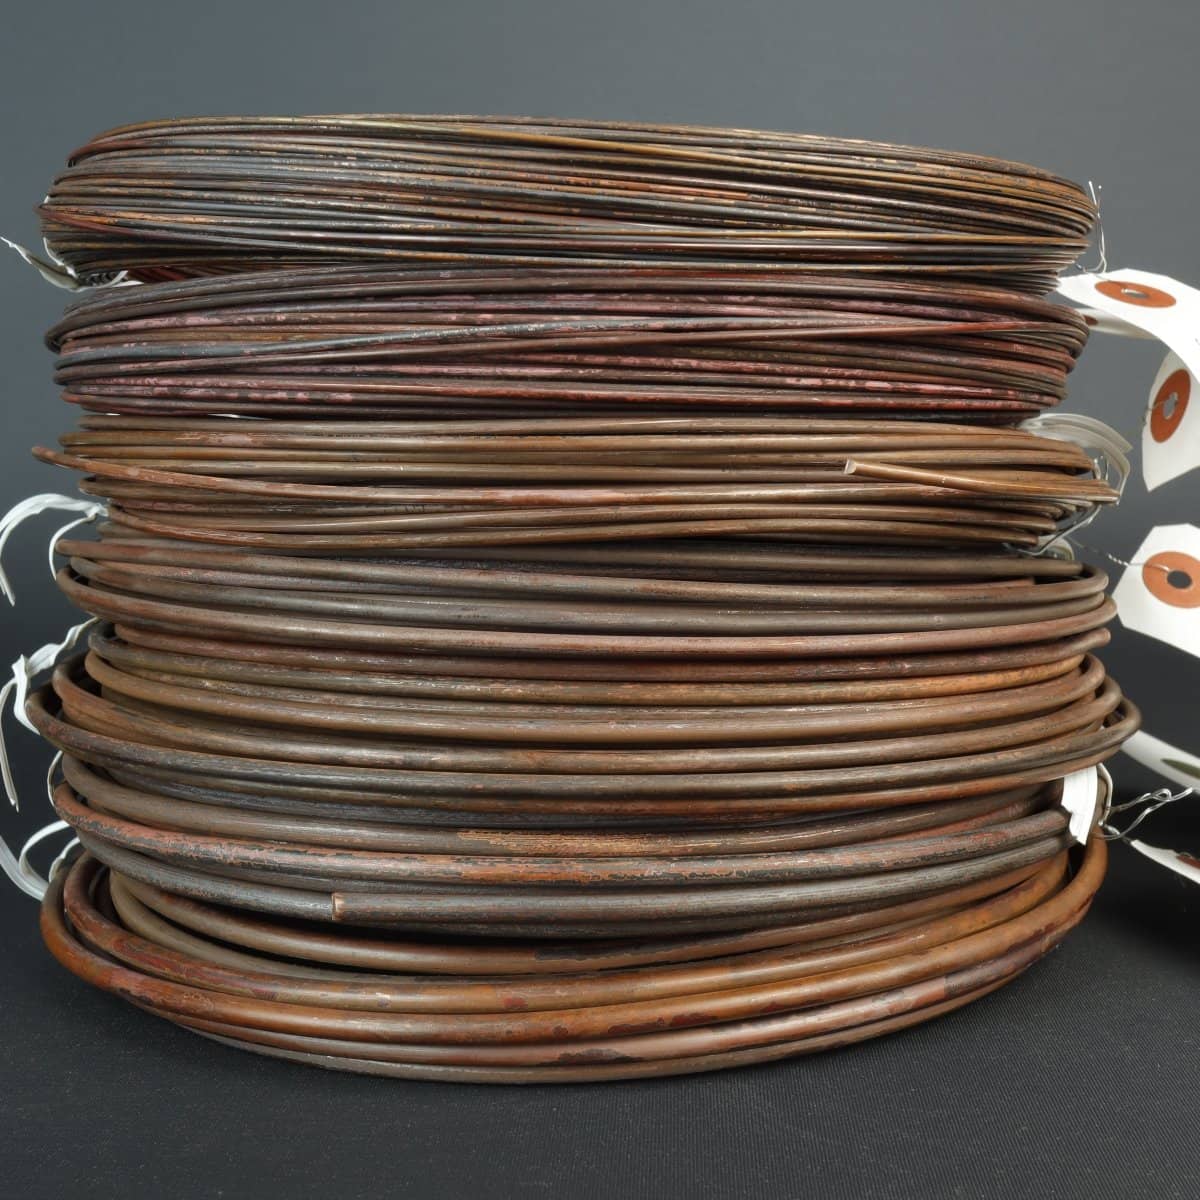 #12 Gauge Copper Bonsai Wire 500g - Bonsai-En